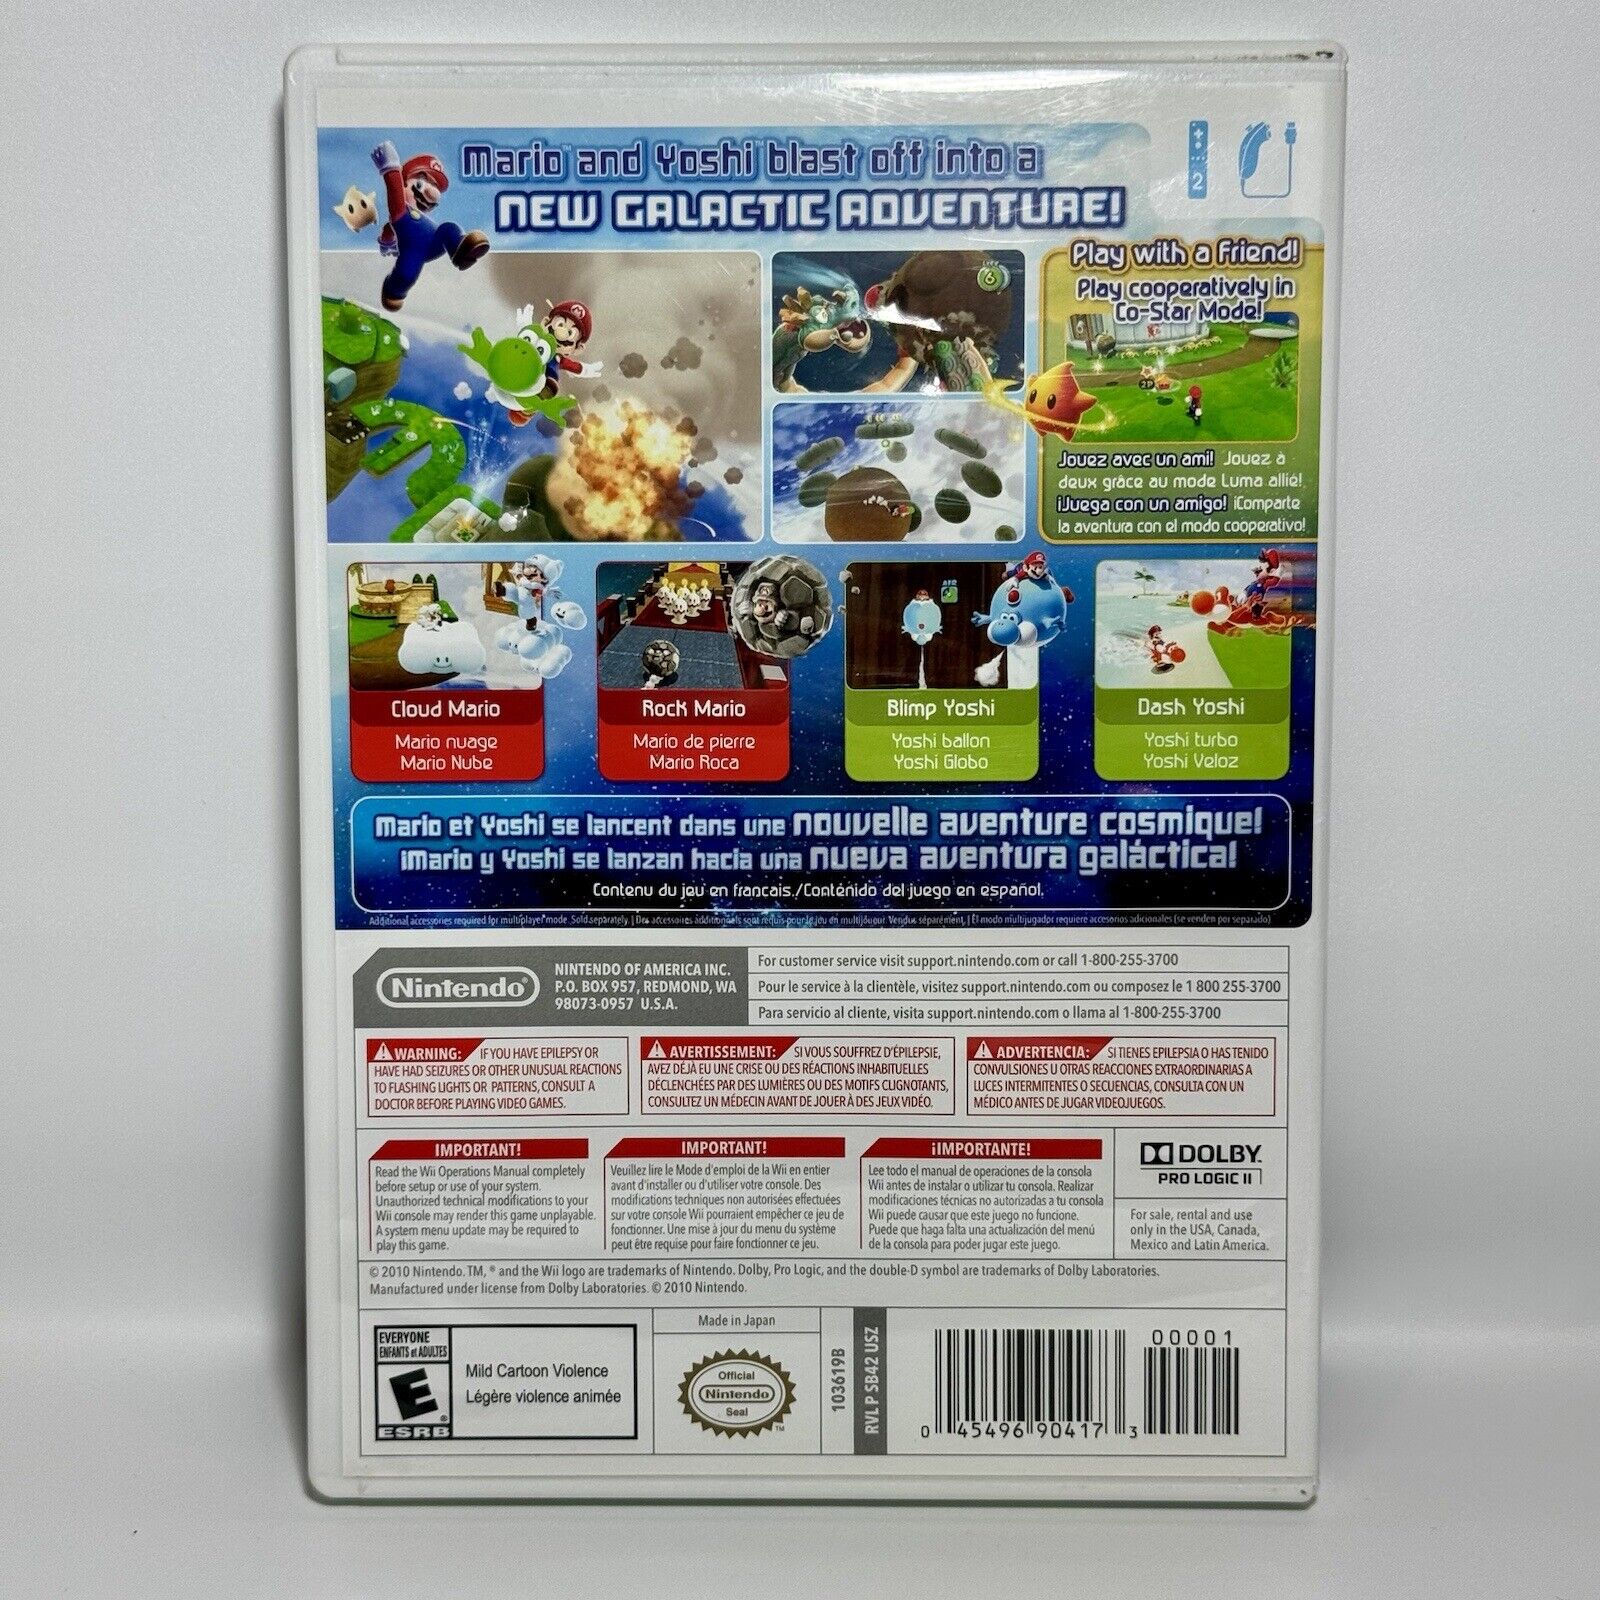 Super Mario Galaxy 2 Wii CIB Free Shipping Same Day Selects